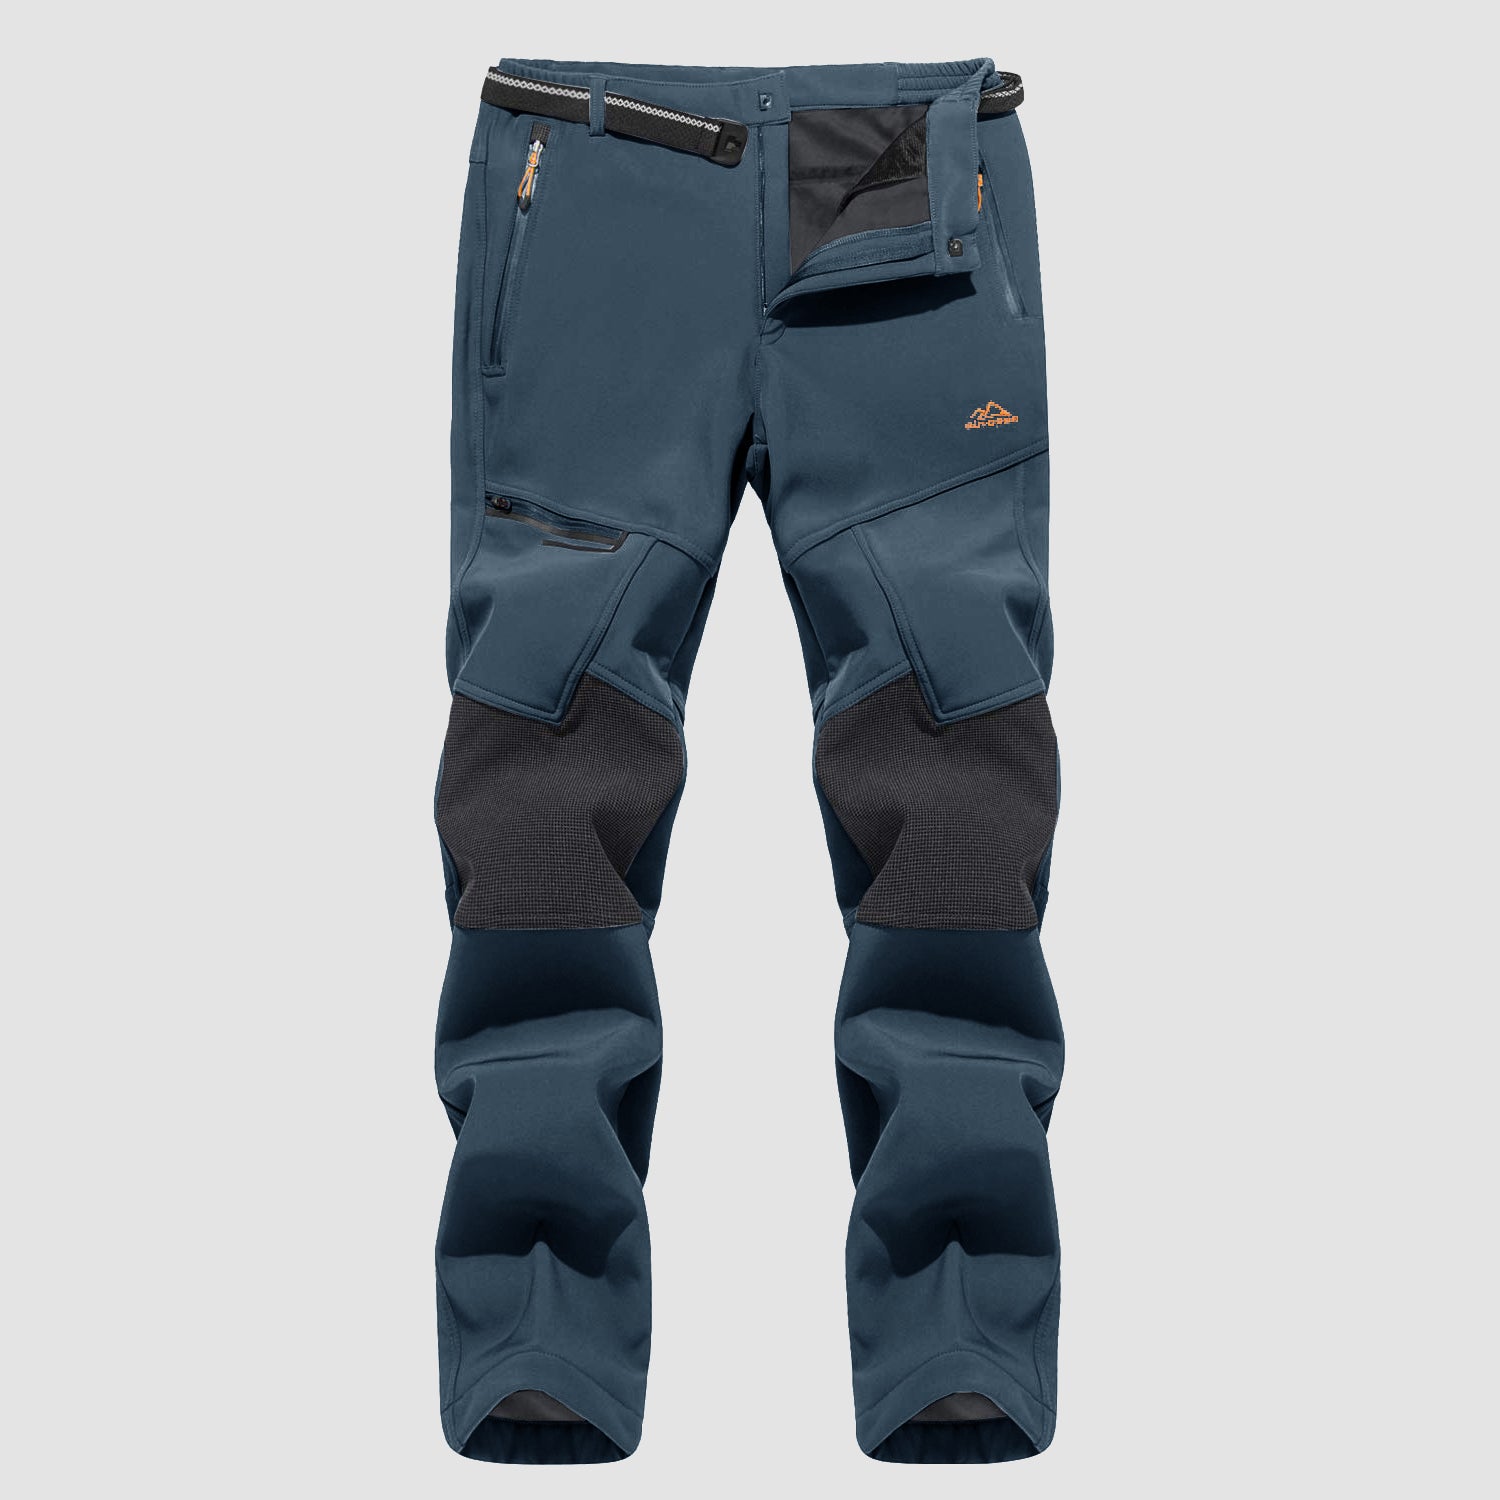 MAGCOMSEN Men's Winter Pants Ski Snow Hiking Pants Water Resistant  Softshell Outdoor Pants